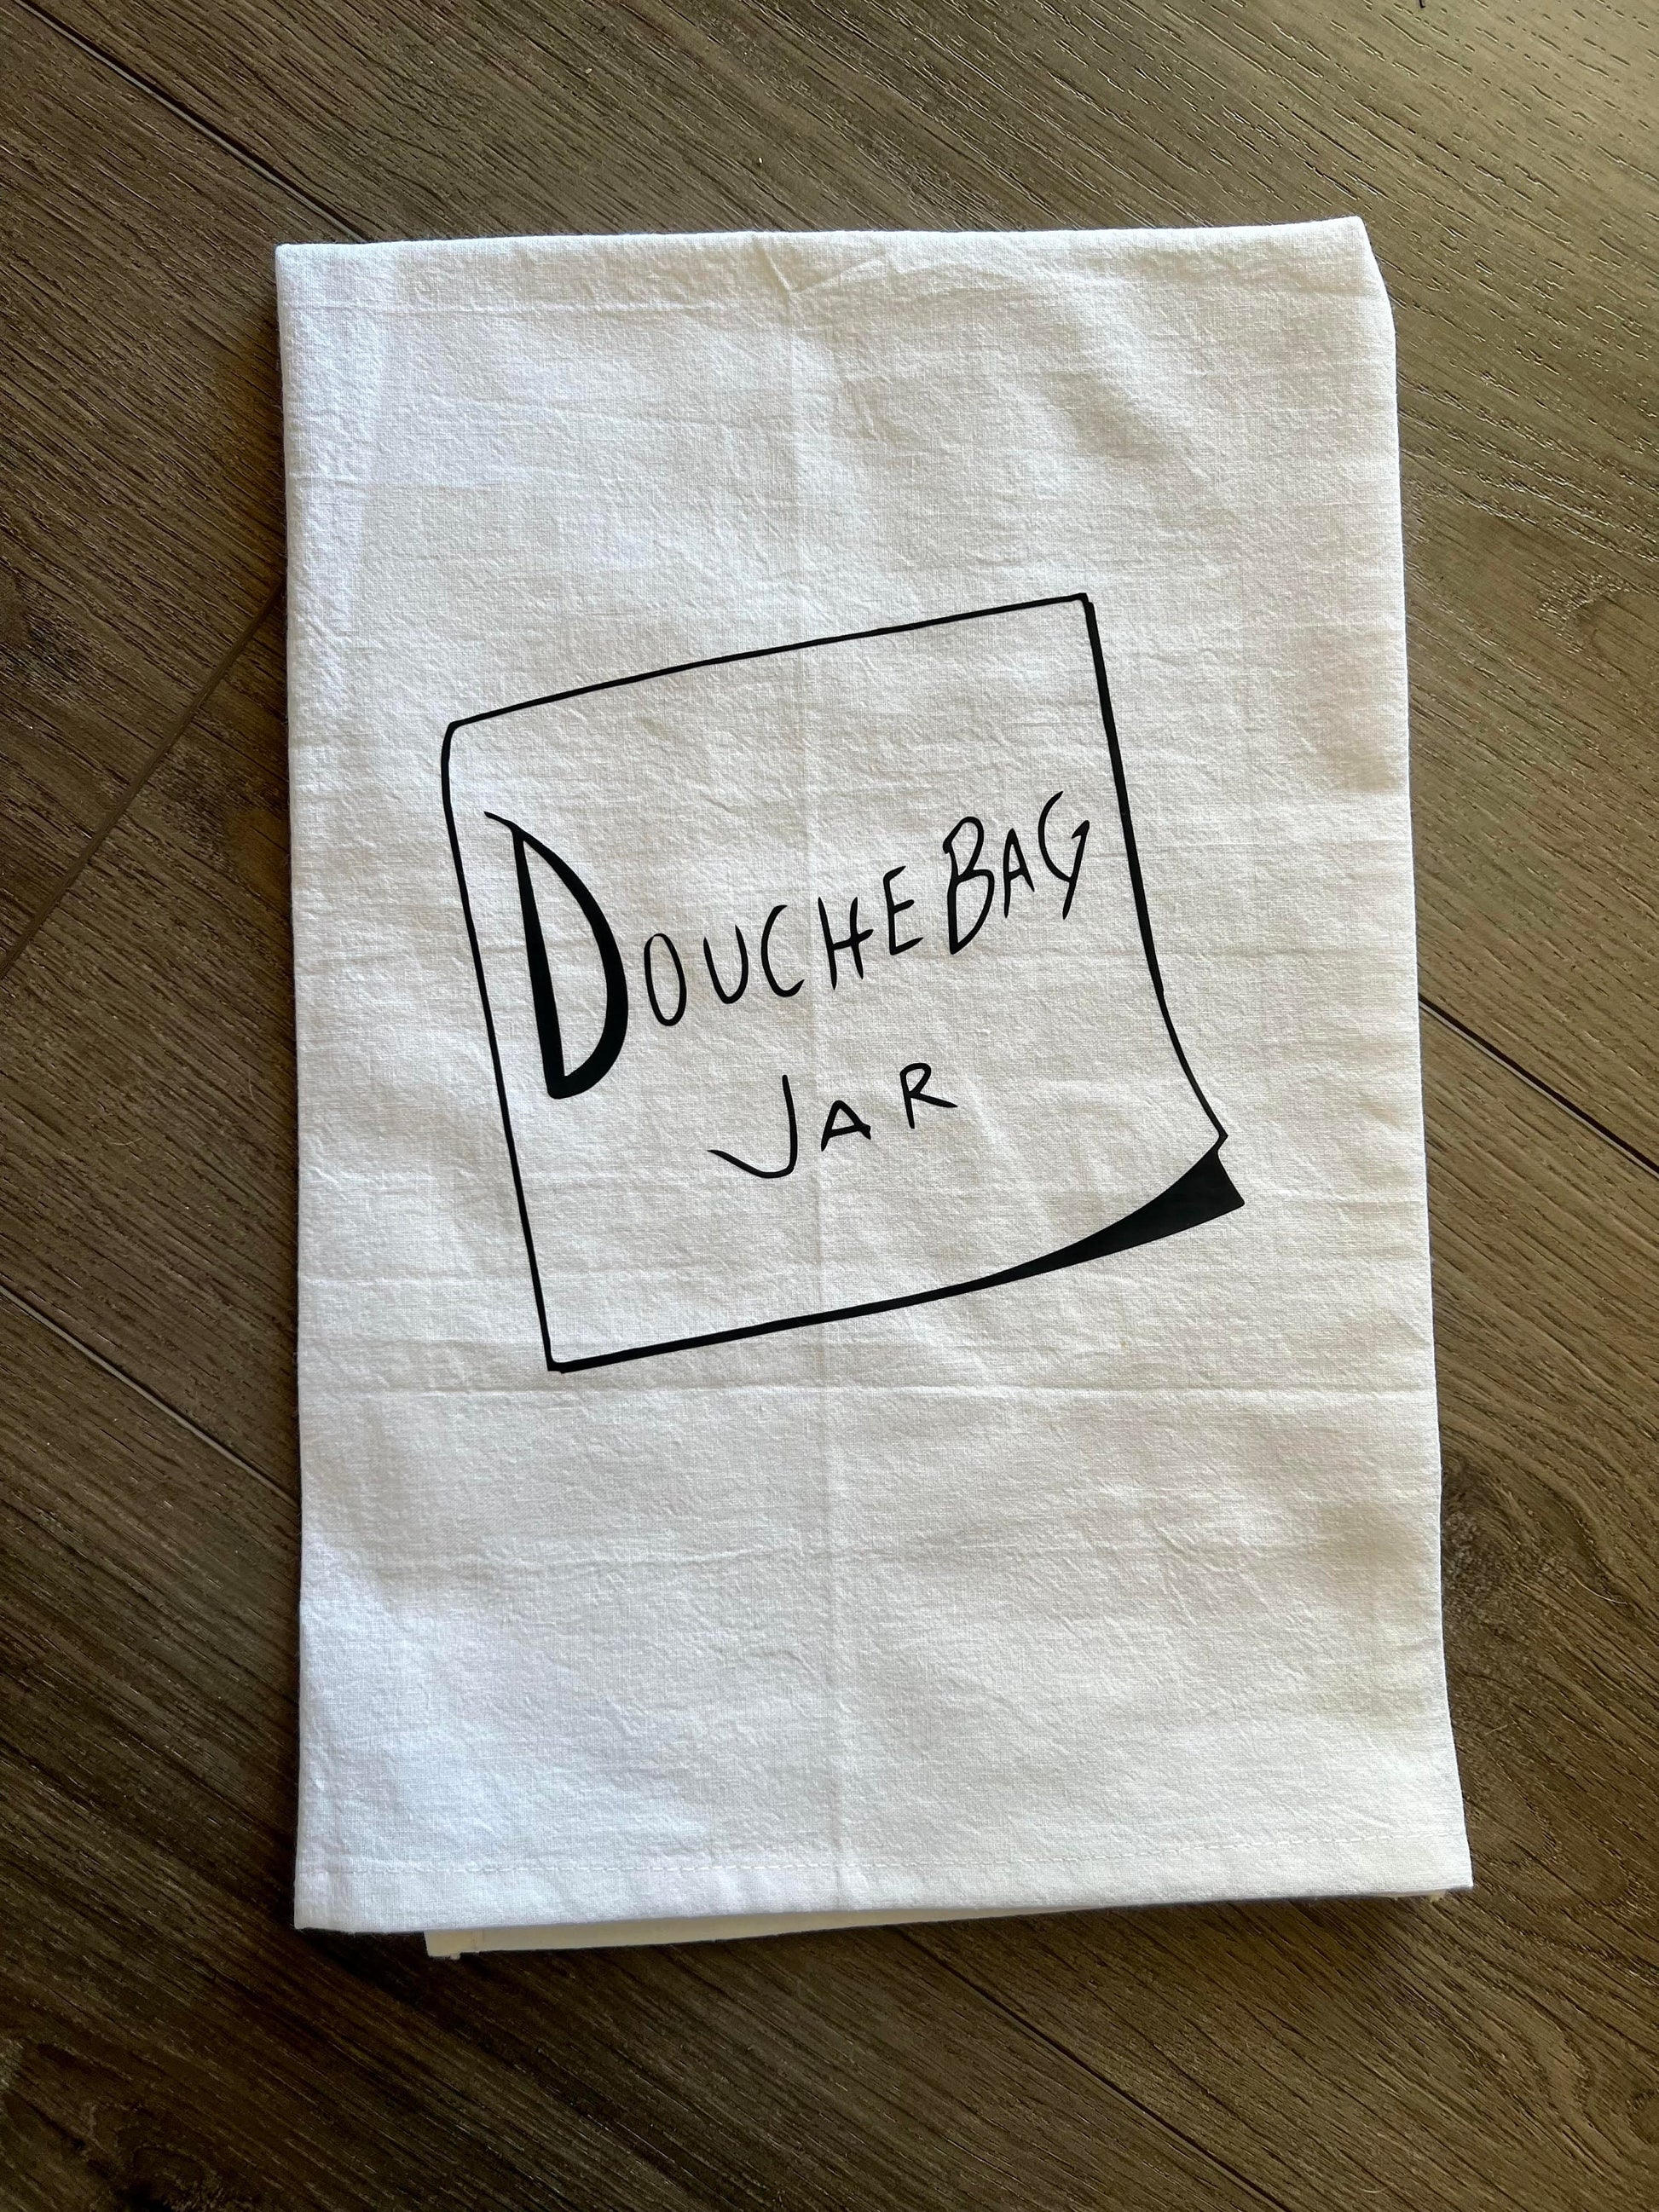 New Girl Douchebag Jar Funny Kitchen Towel housewarming gift New Girl Merch Schmidt